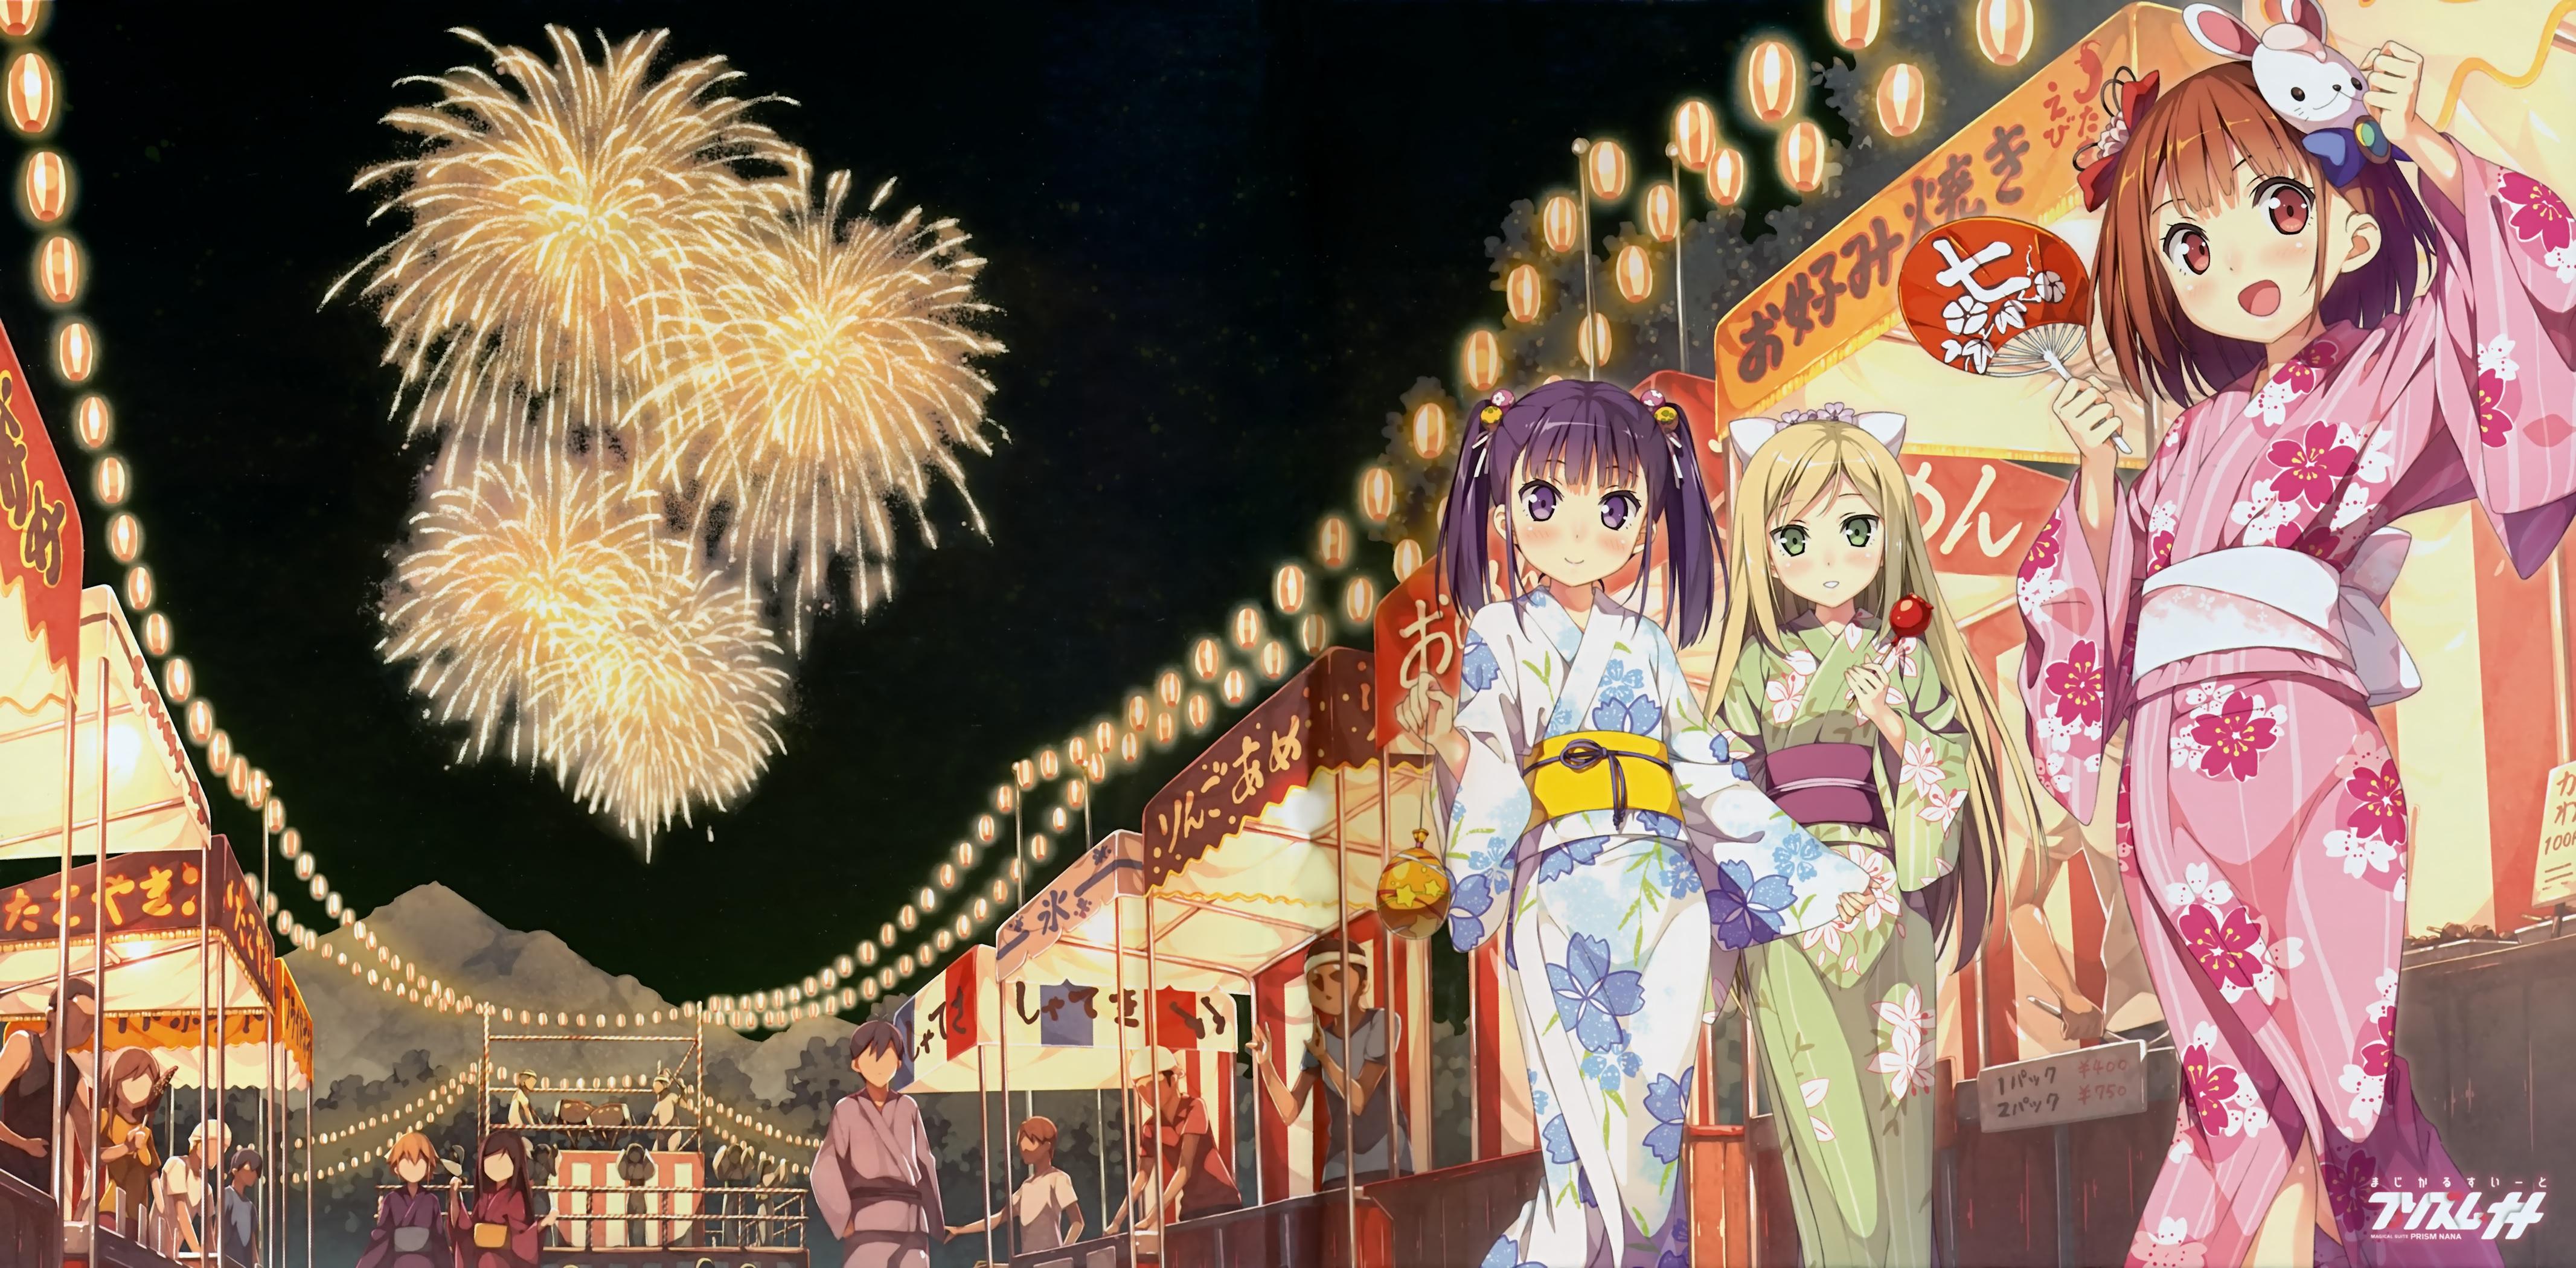 Festival  Other  Anime Background Wallpapers on Desktop Nexus Image  2504830